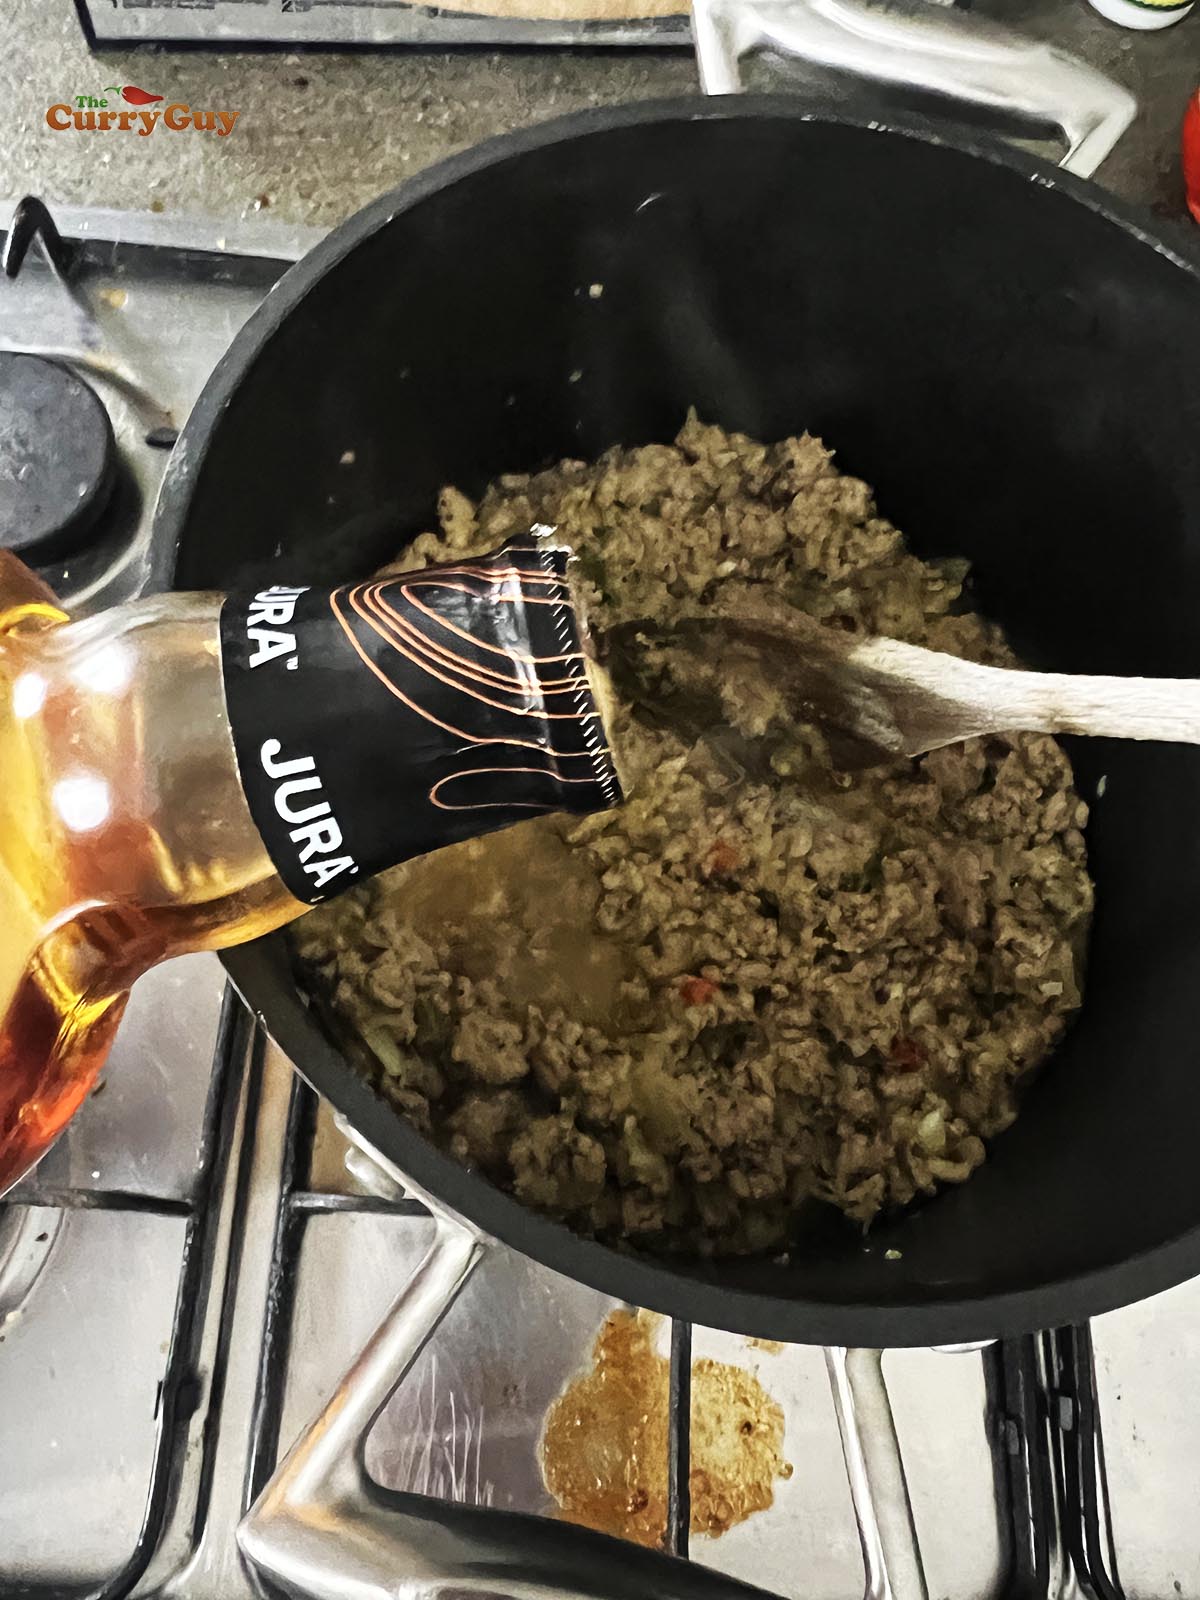 Adding whiskey to the pan.